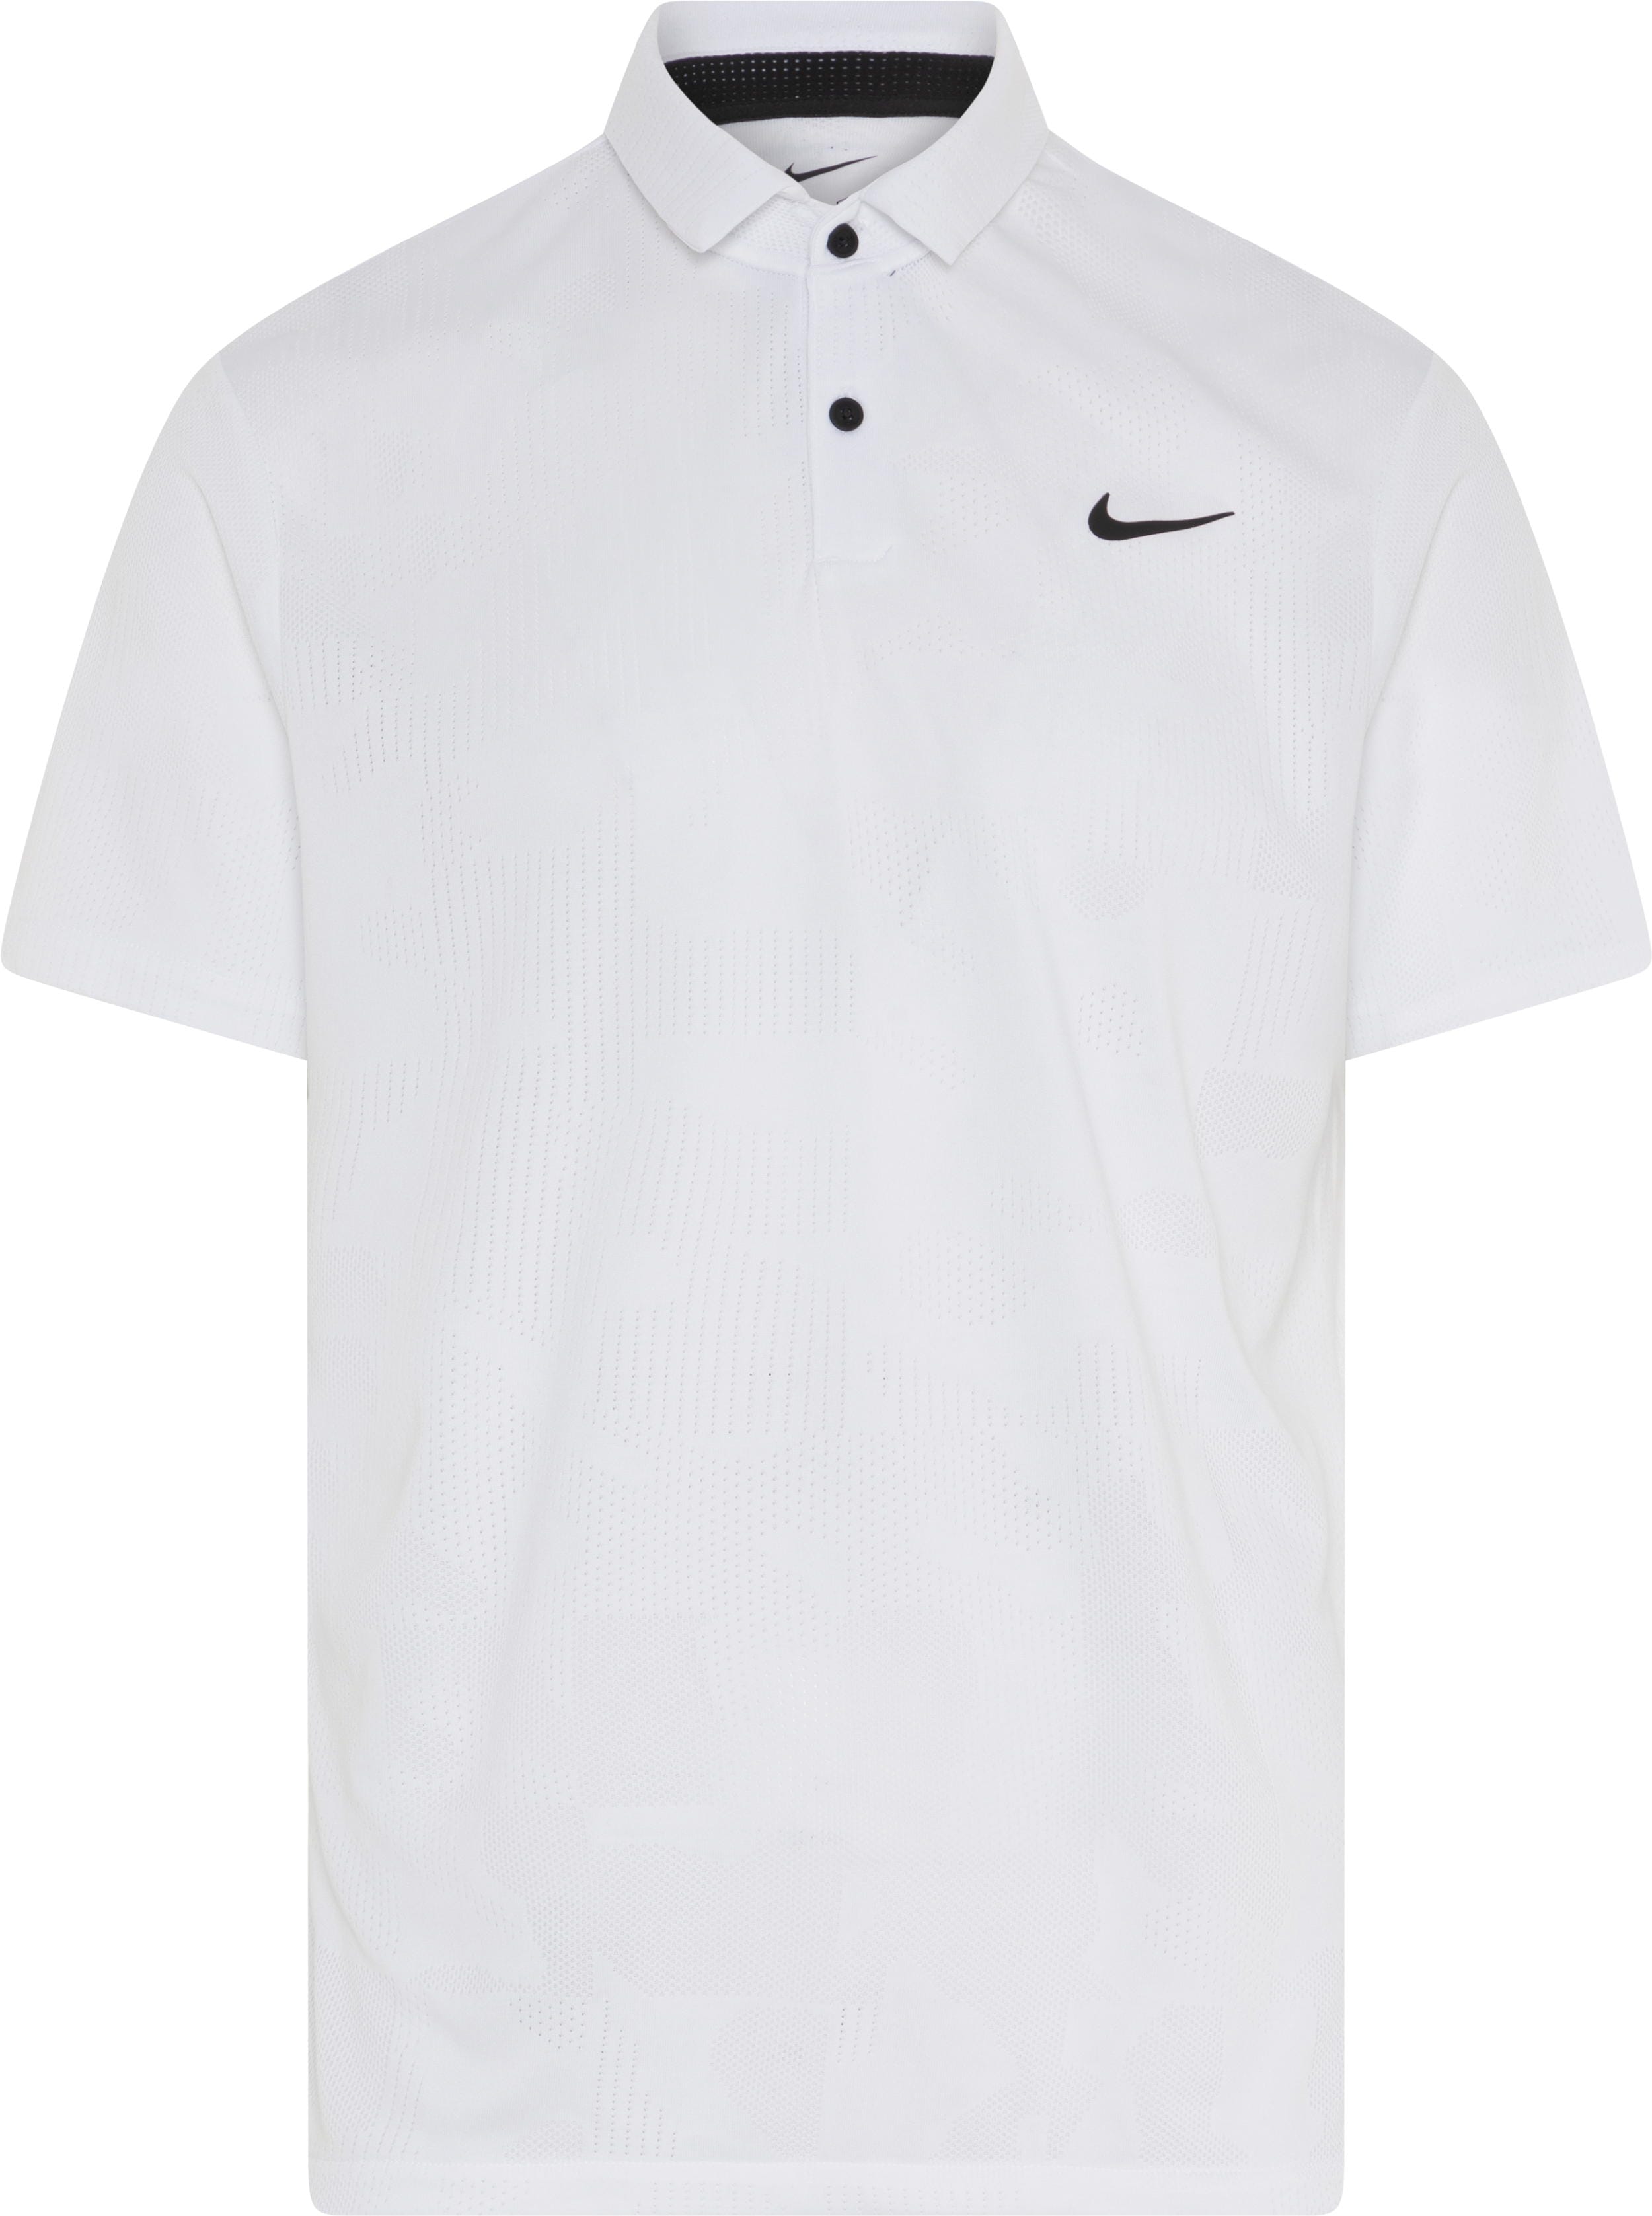 Nike Dri-Fit Tour Jacquard Polo, white